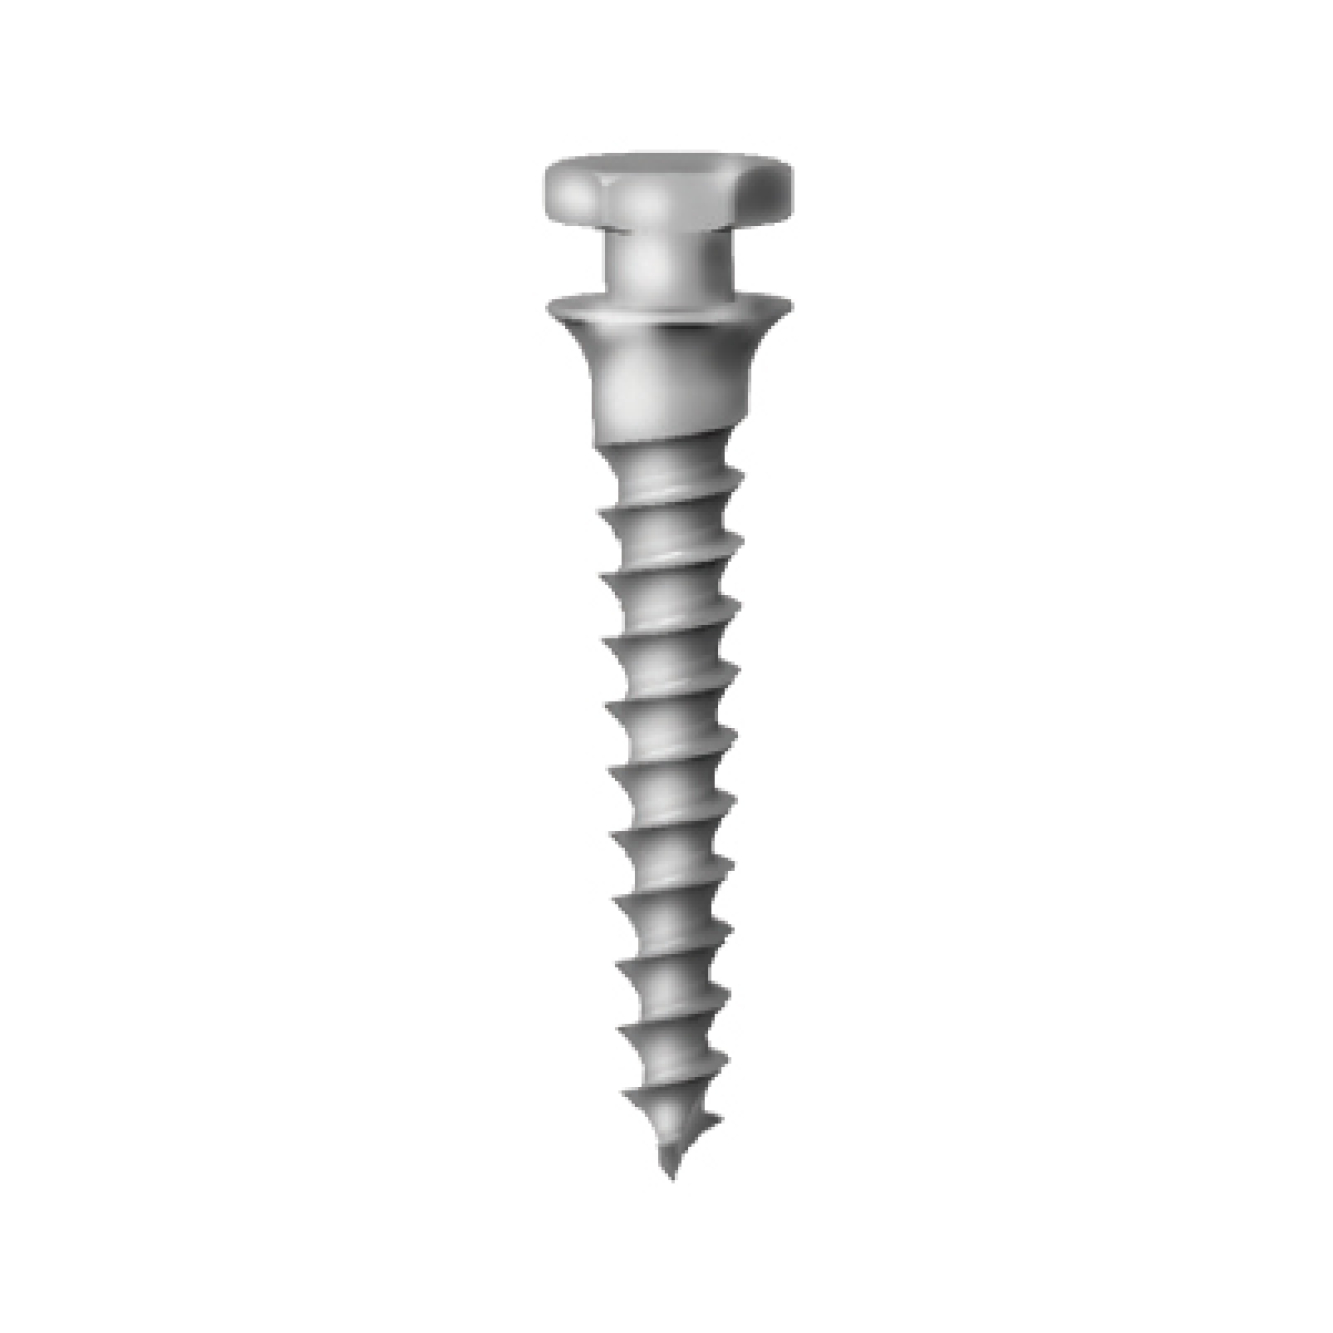 SA-L-16-006 Стоматологический ортодонтический винт для эластичной тяги и проволоки, диаметр 1.6 мм, длина 6 мм, Mr.Curette Tech, Южная Корея